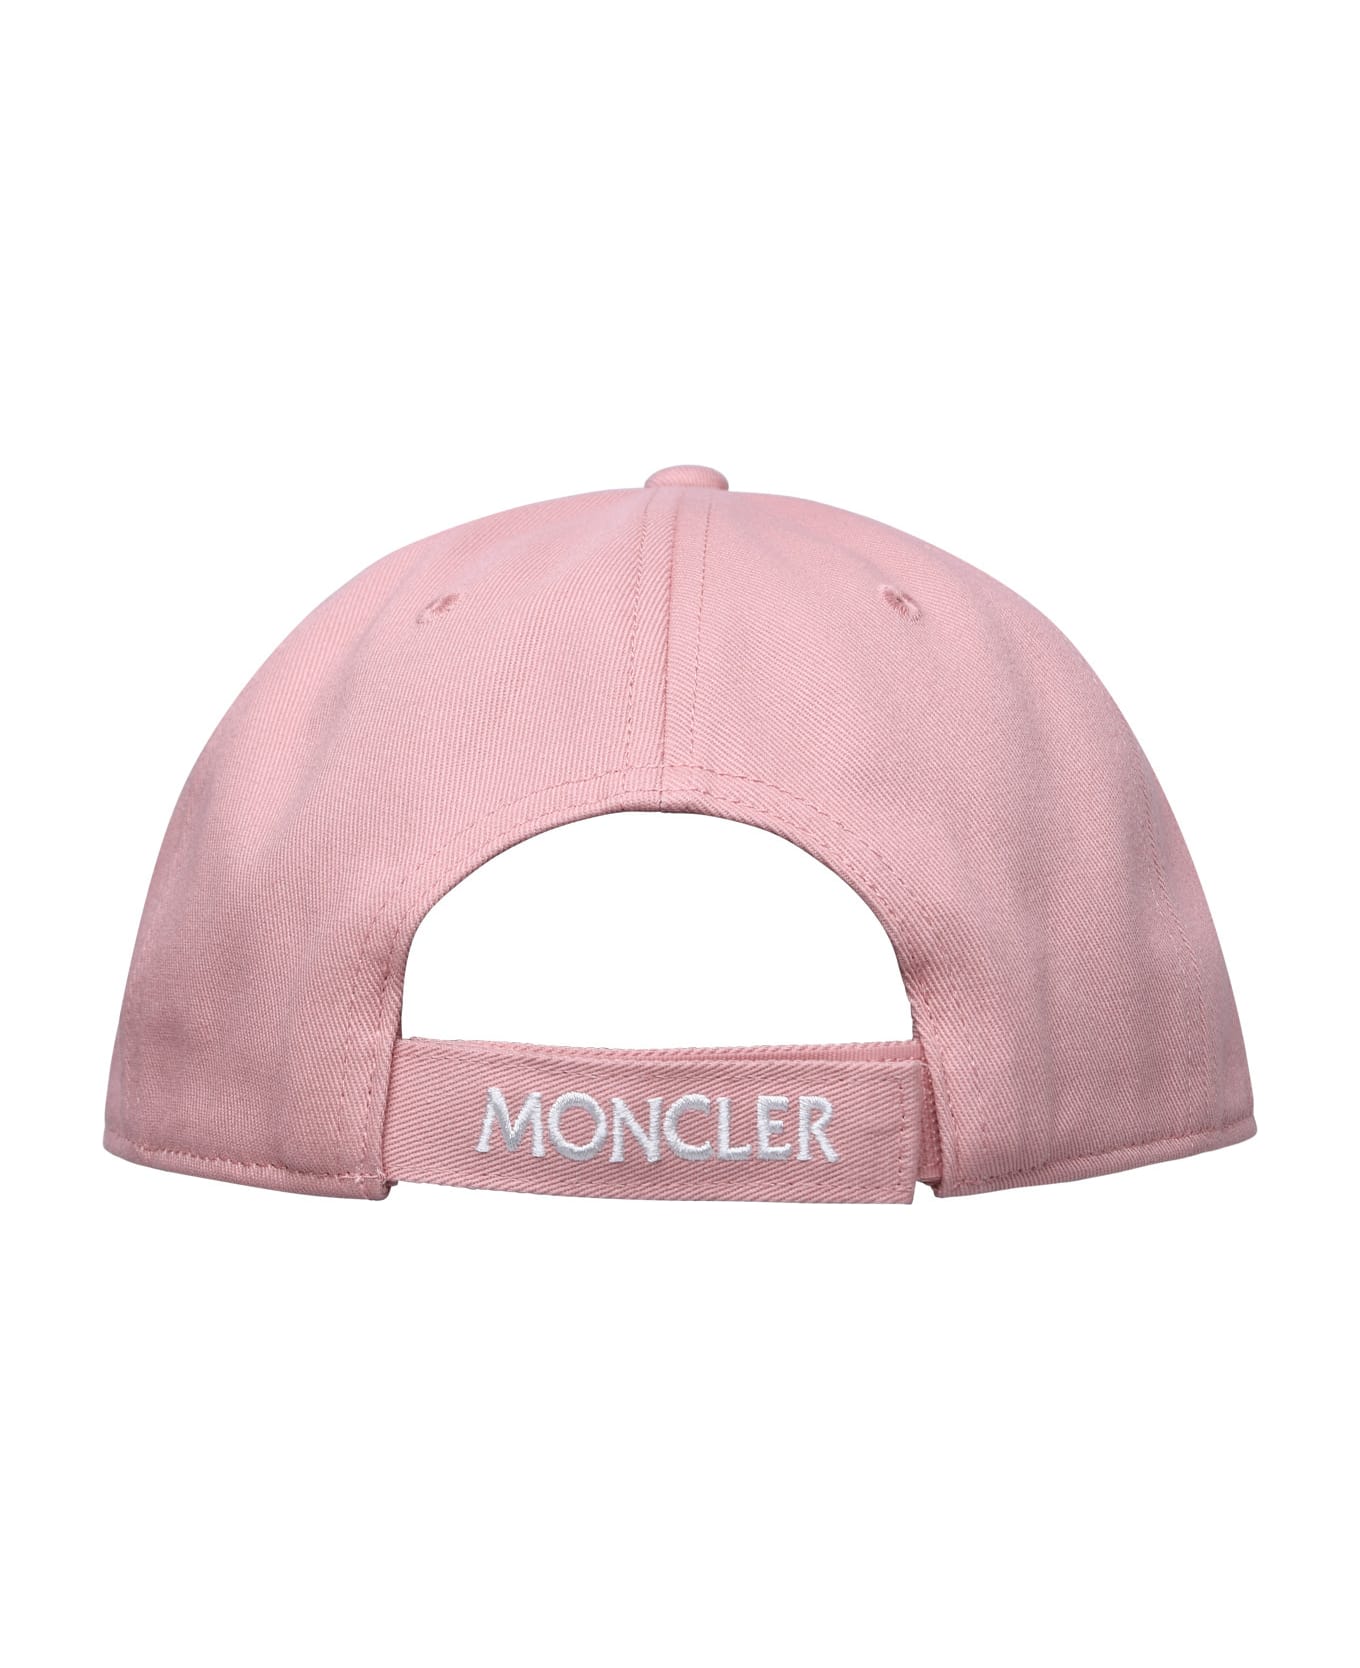 Moncler Pink Cotton Hat - 510 帽子